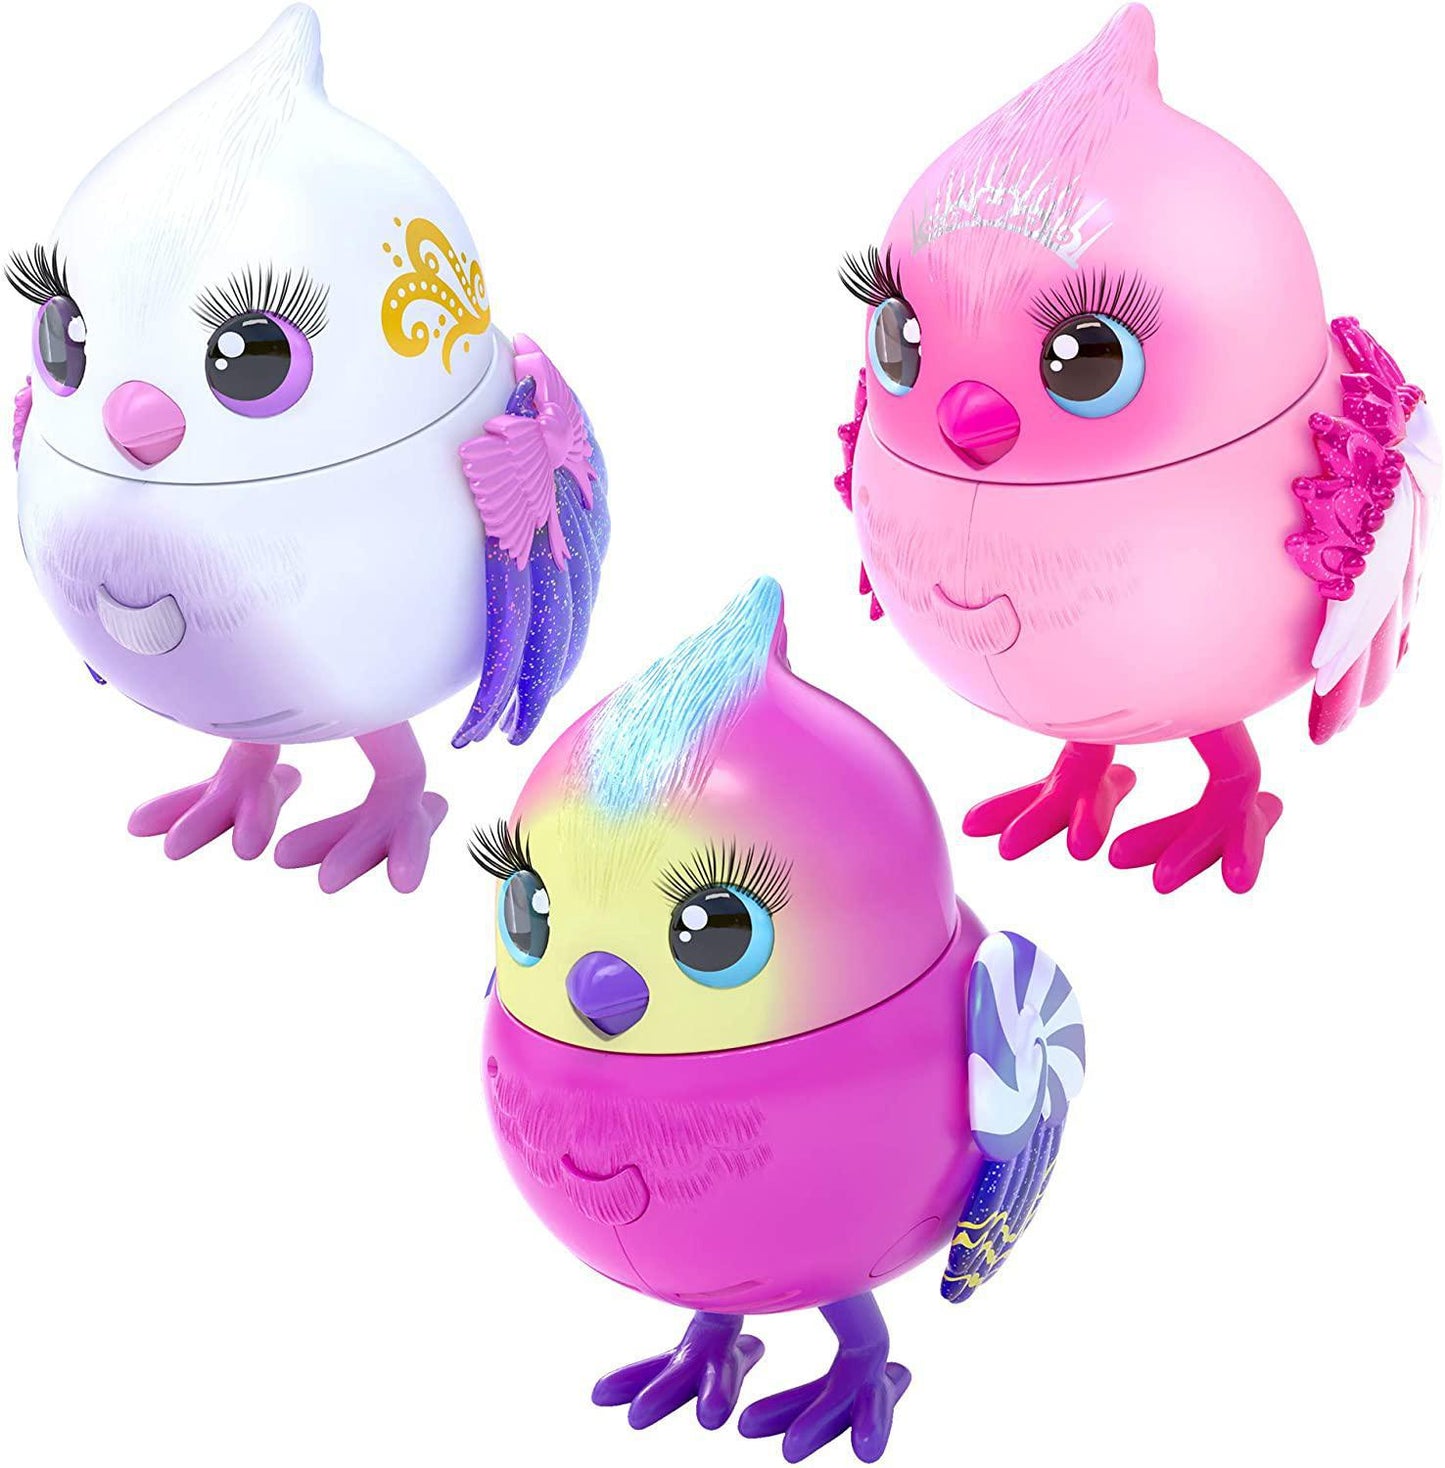 Little Live Pets Bird Pet - Tiara Tweets, Tweeterina - Interactive Pretend Play Bird Doll Toy with Sound